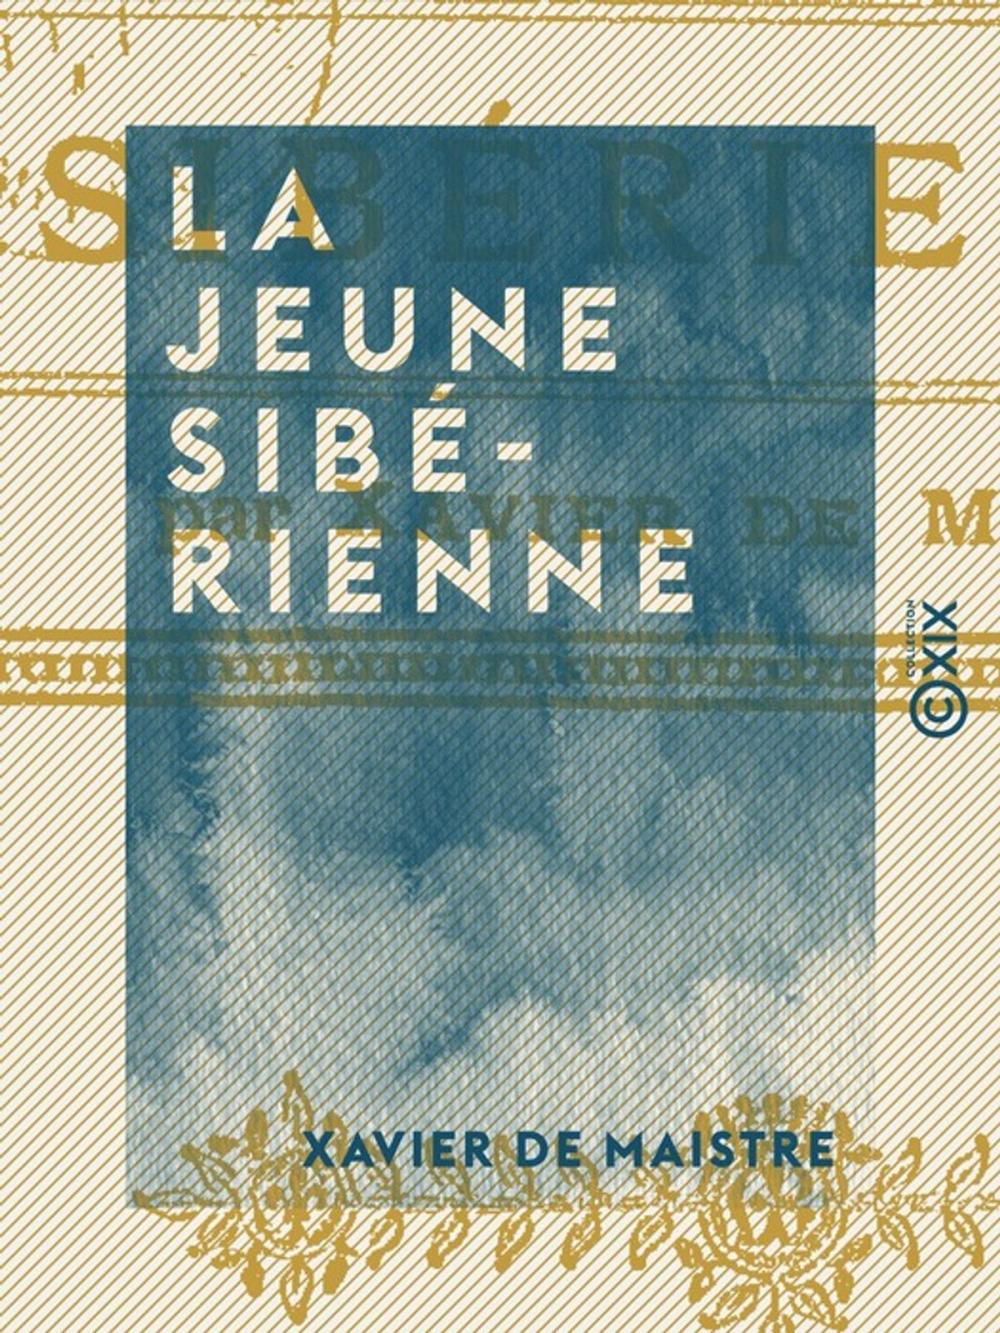 Big bigCover of La Jeune Sibérienne